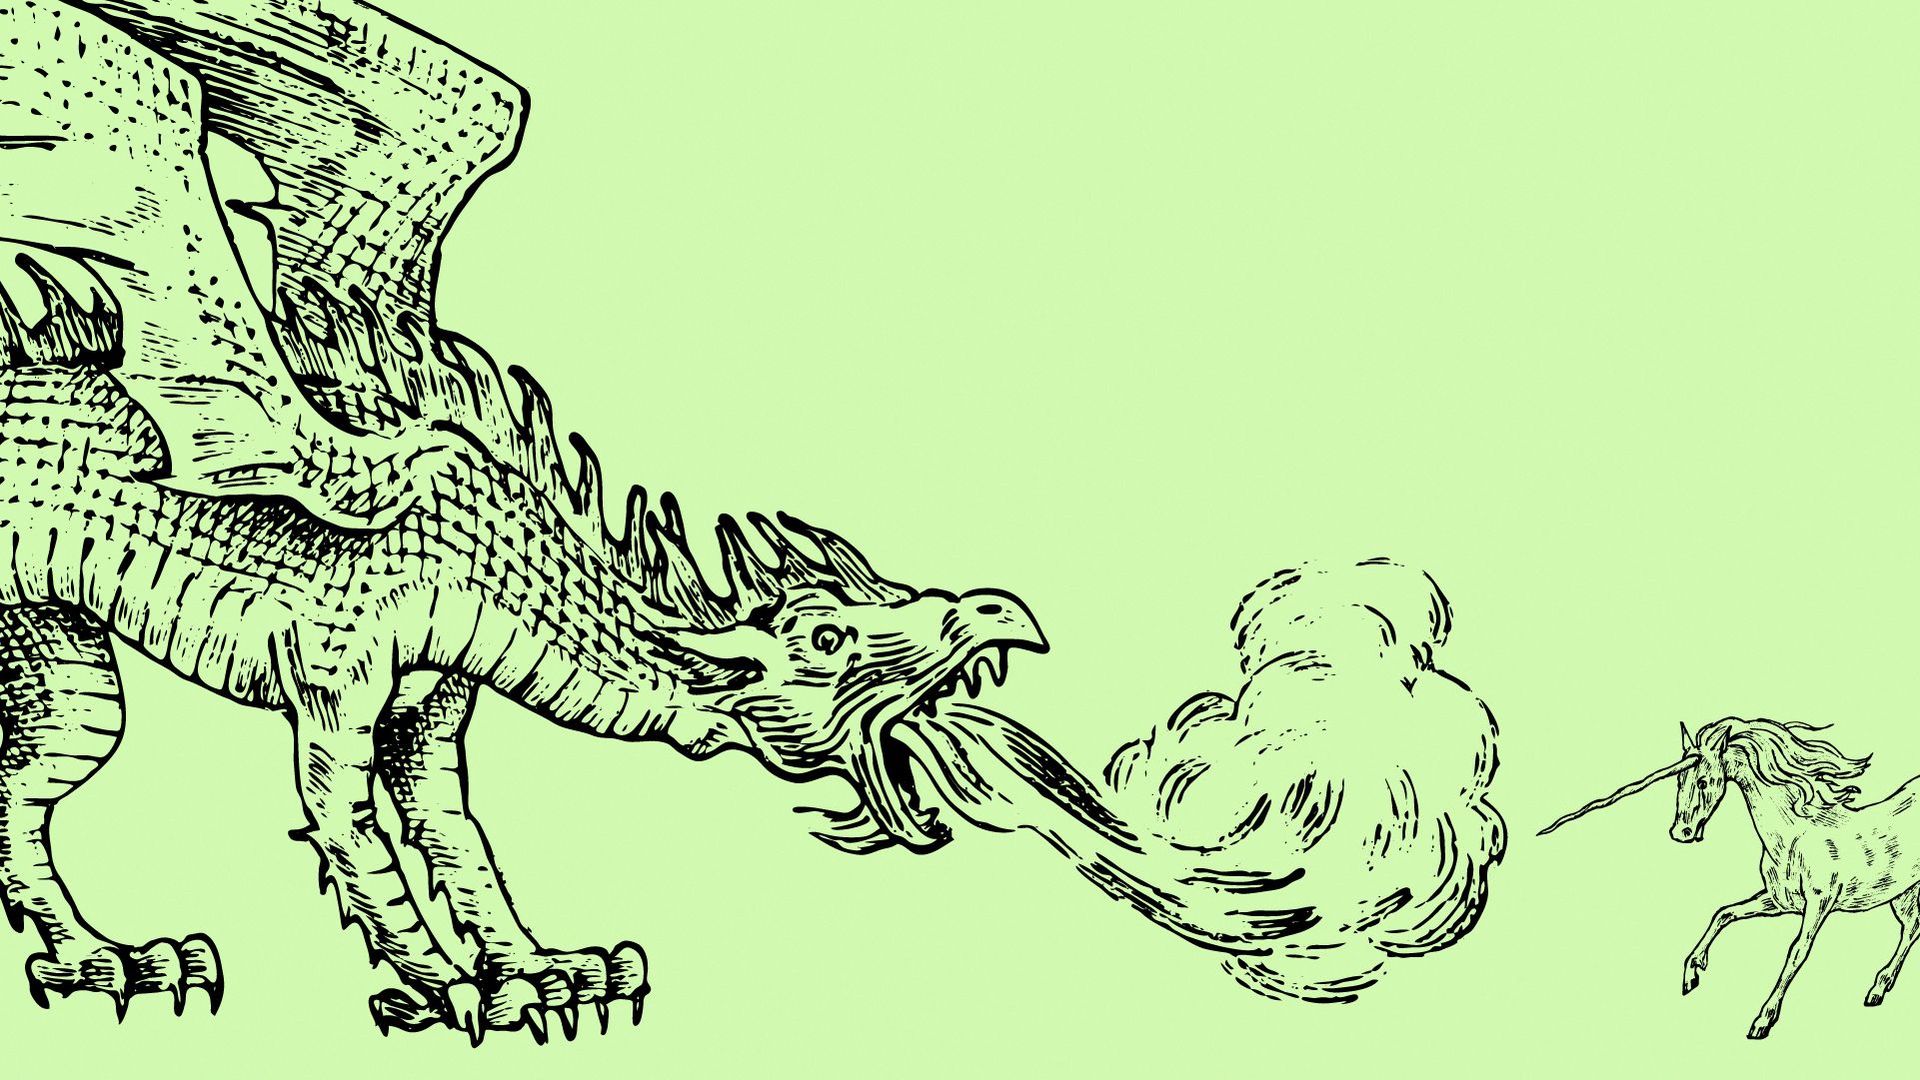 Illustration of a dragon burning a tiny unicorn.